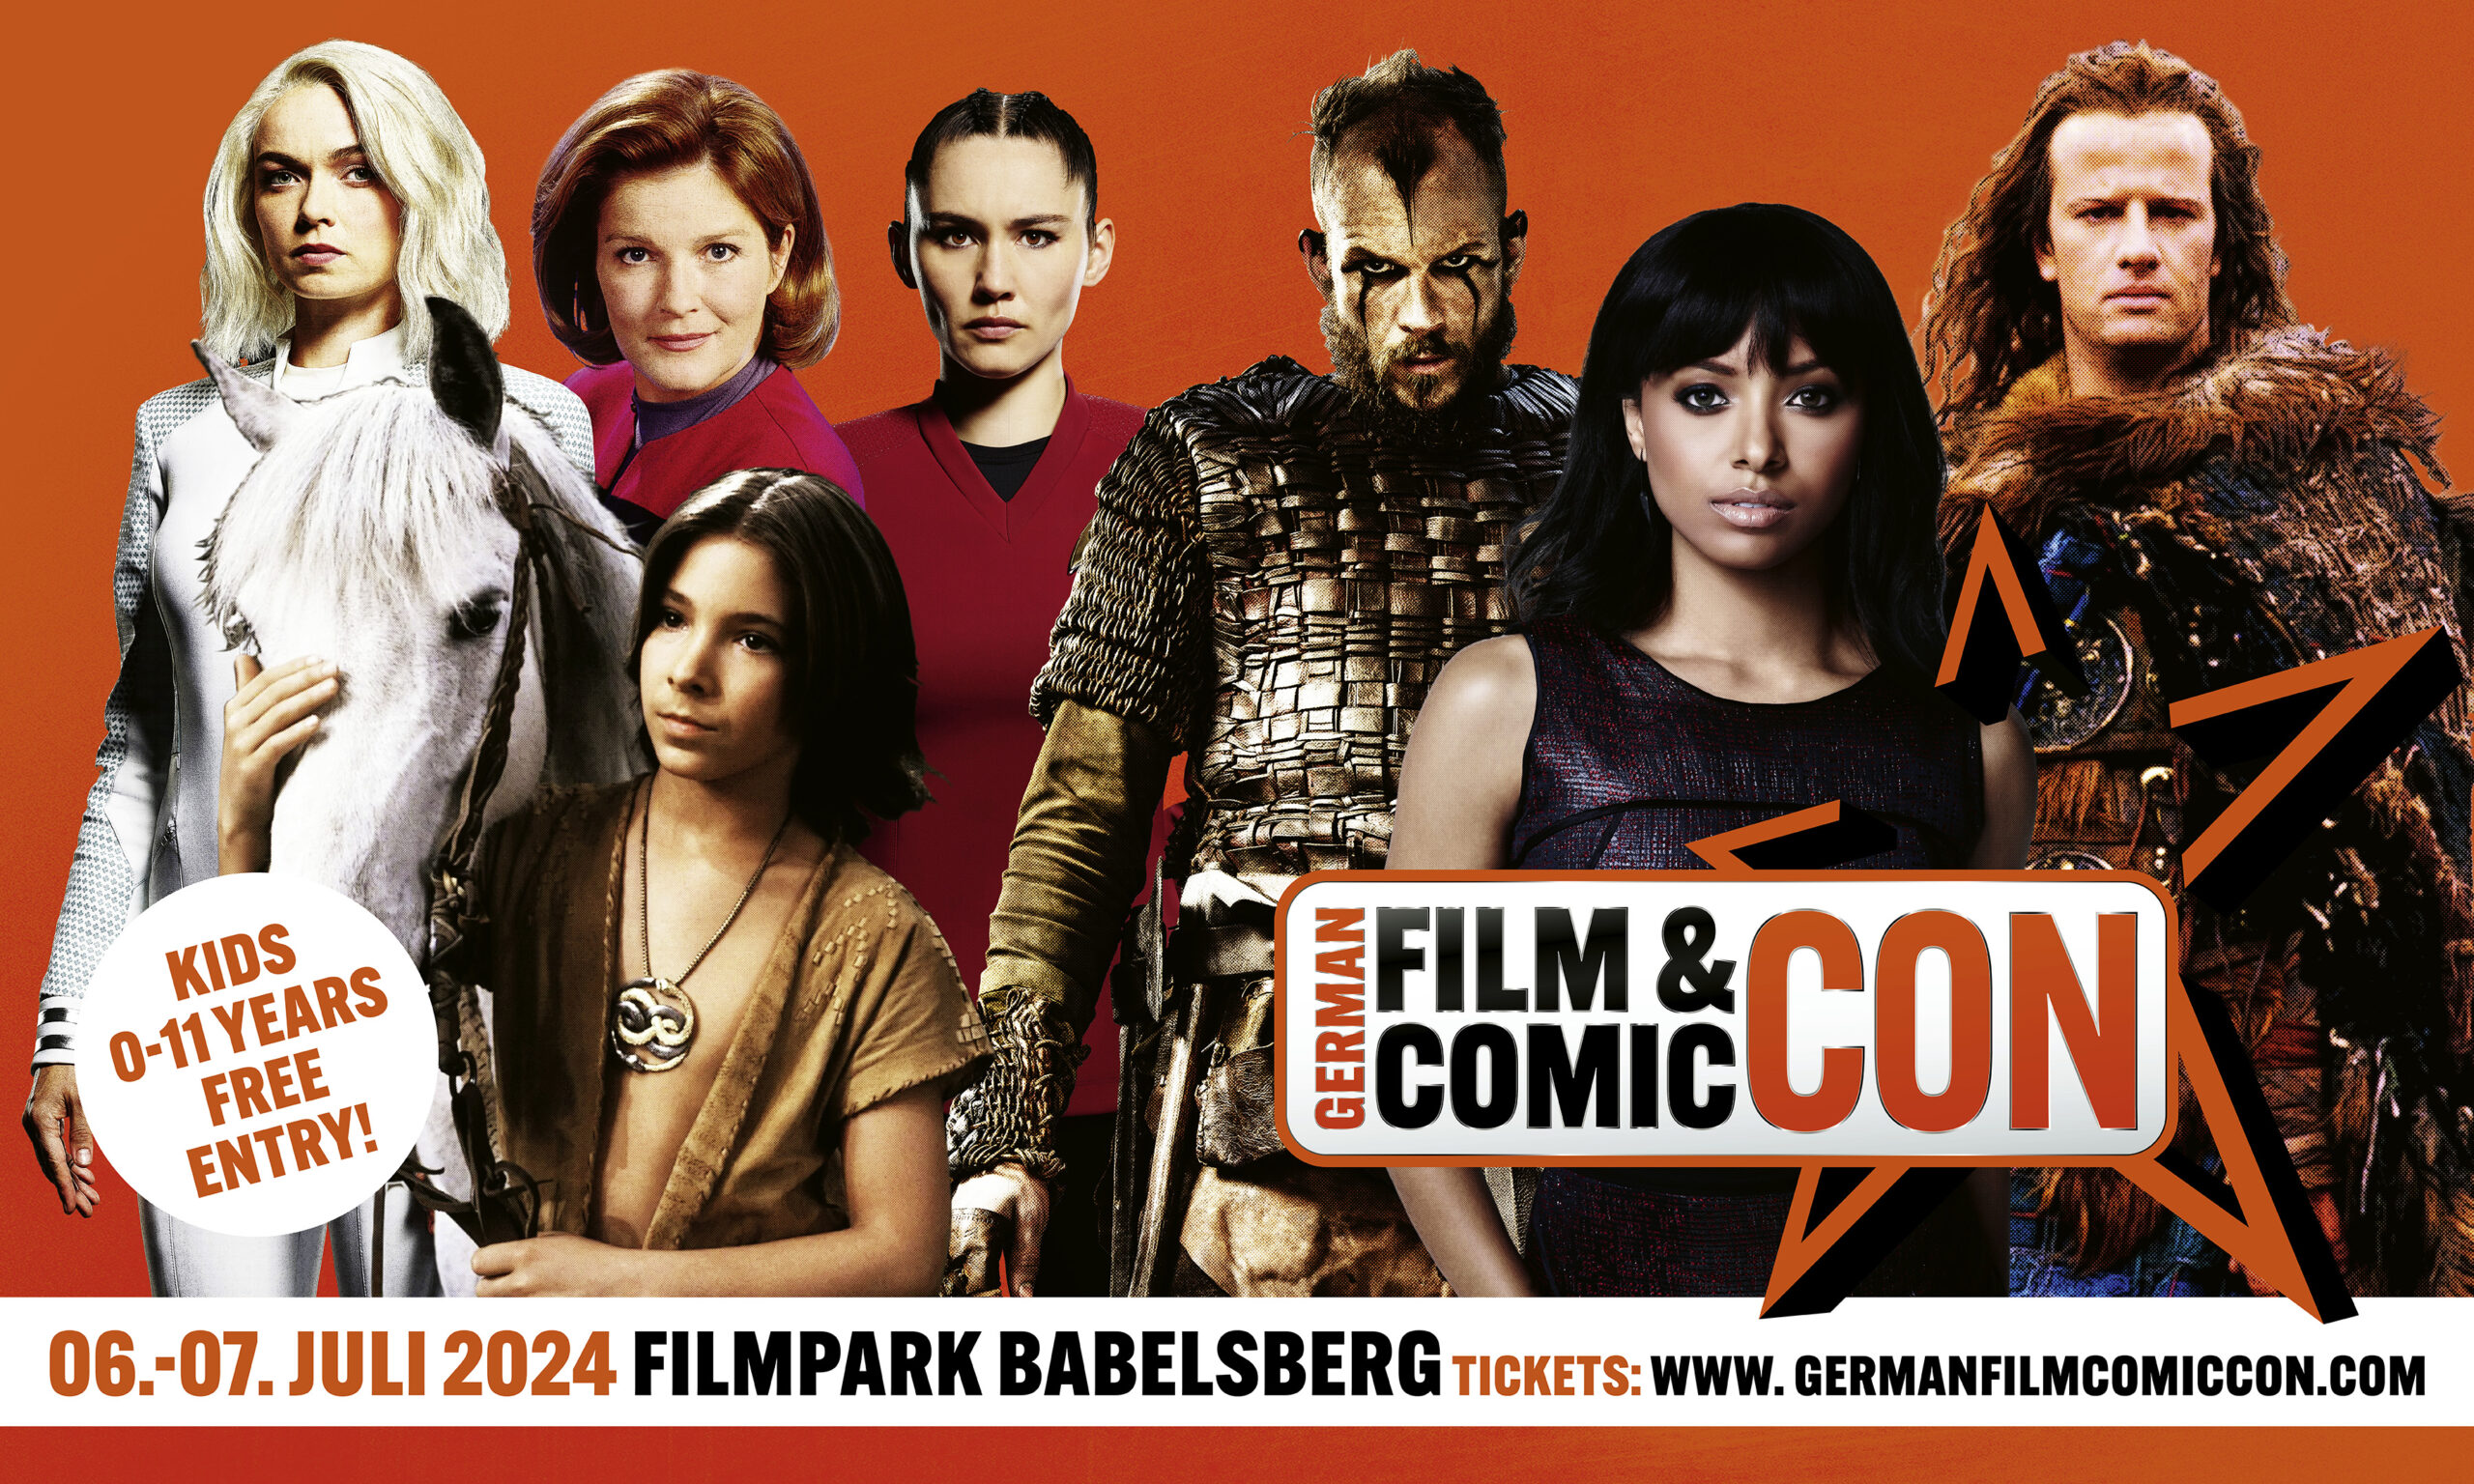 German Film & Comic Con im Filmpark Babelsberg